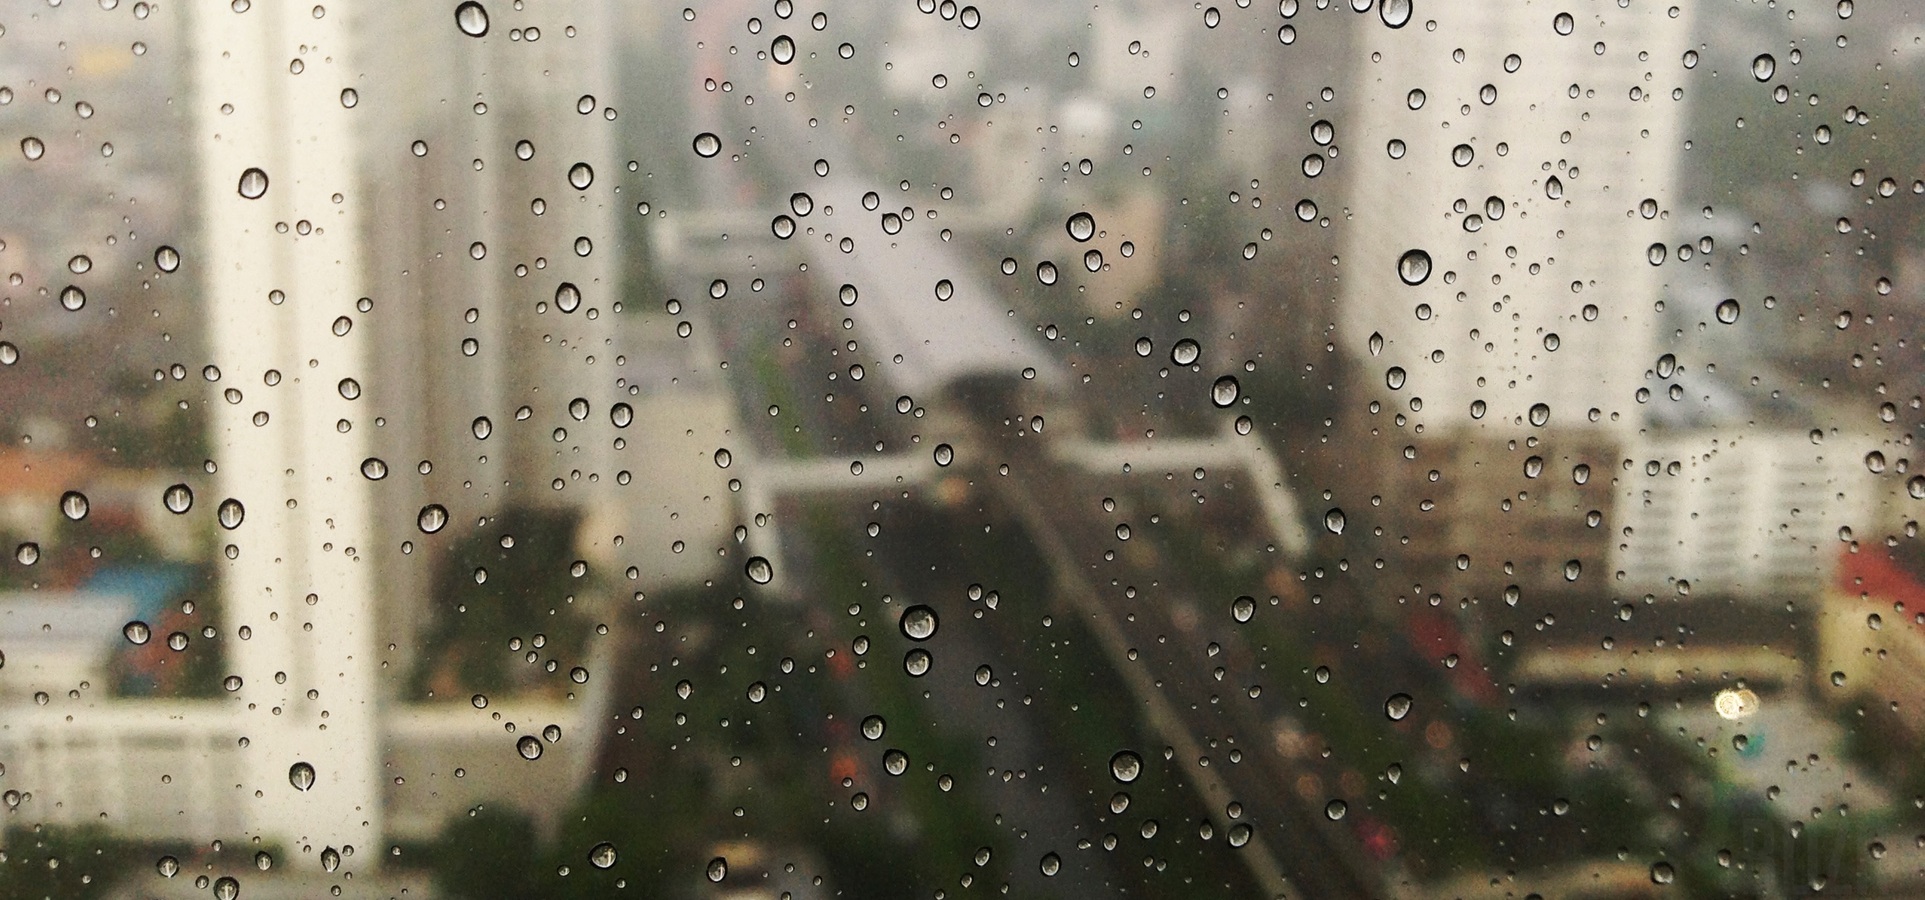 Rain on a window by Thanun Buranapong via Unsplash